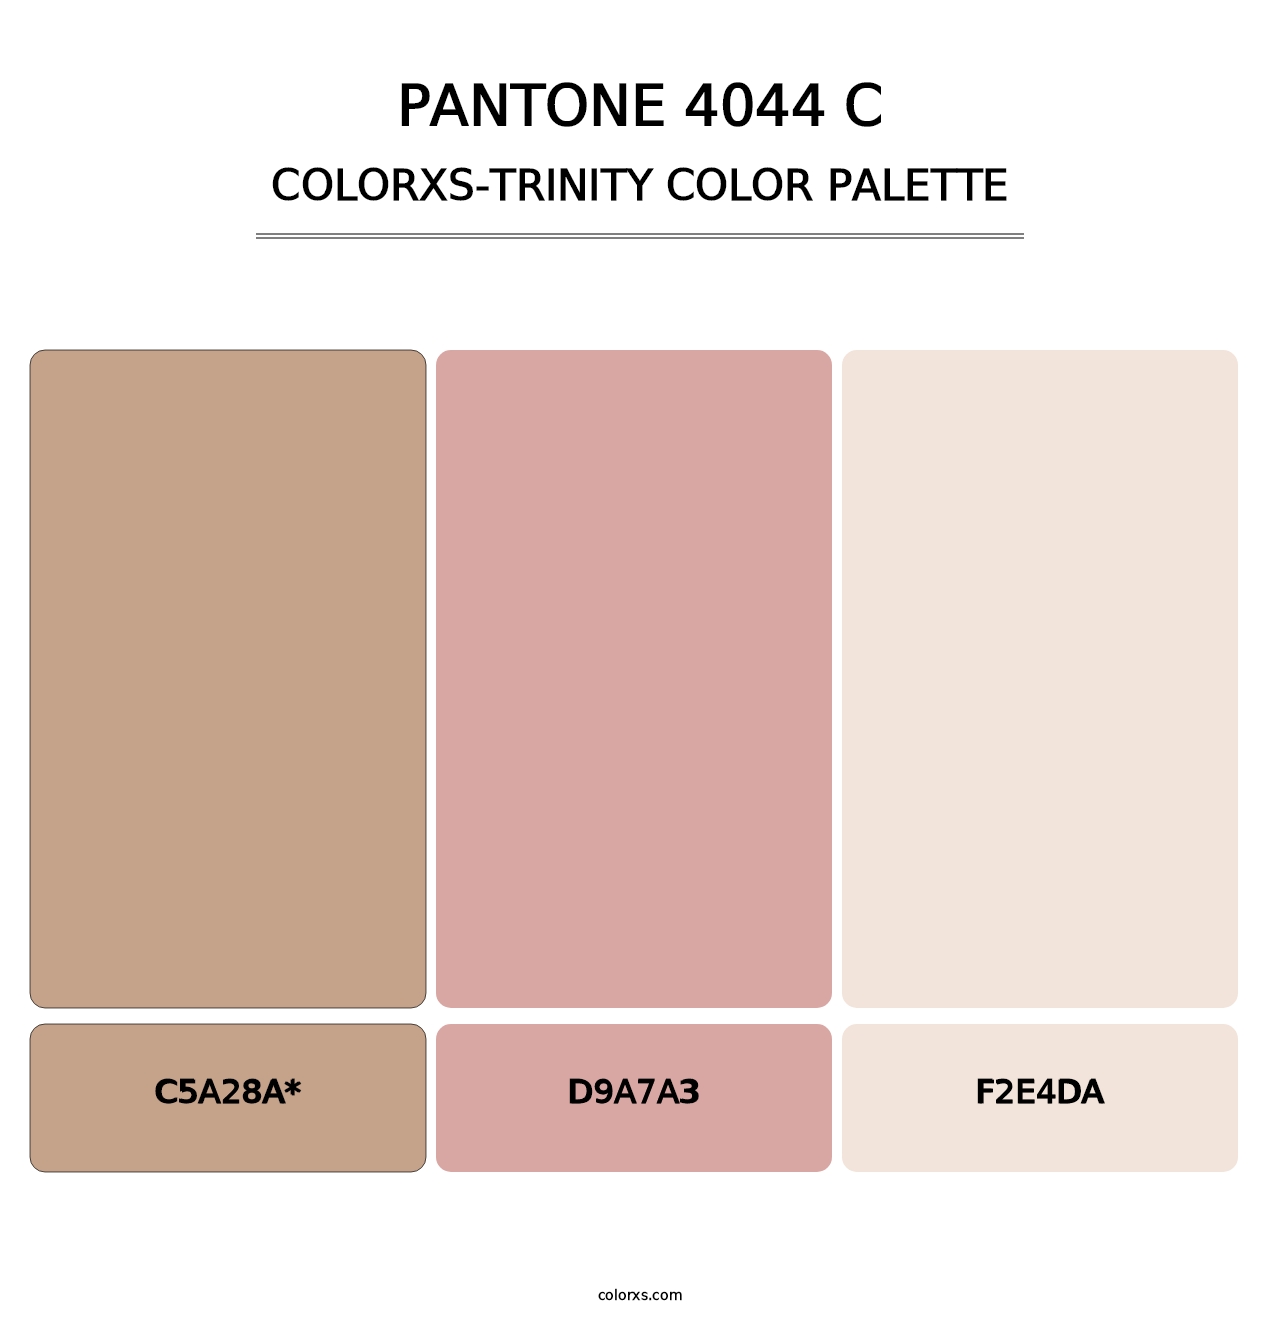 PANTONE 4044 C - Colorxs Trinity Palette